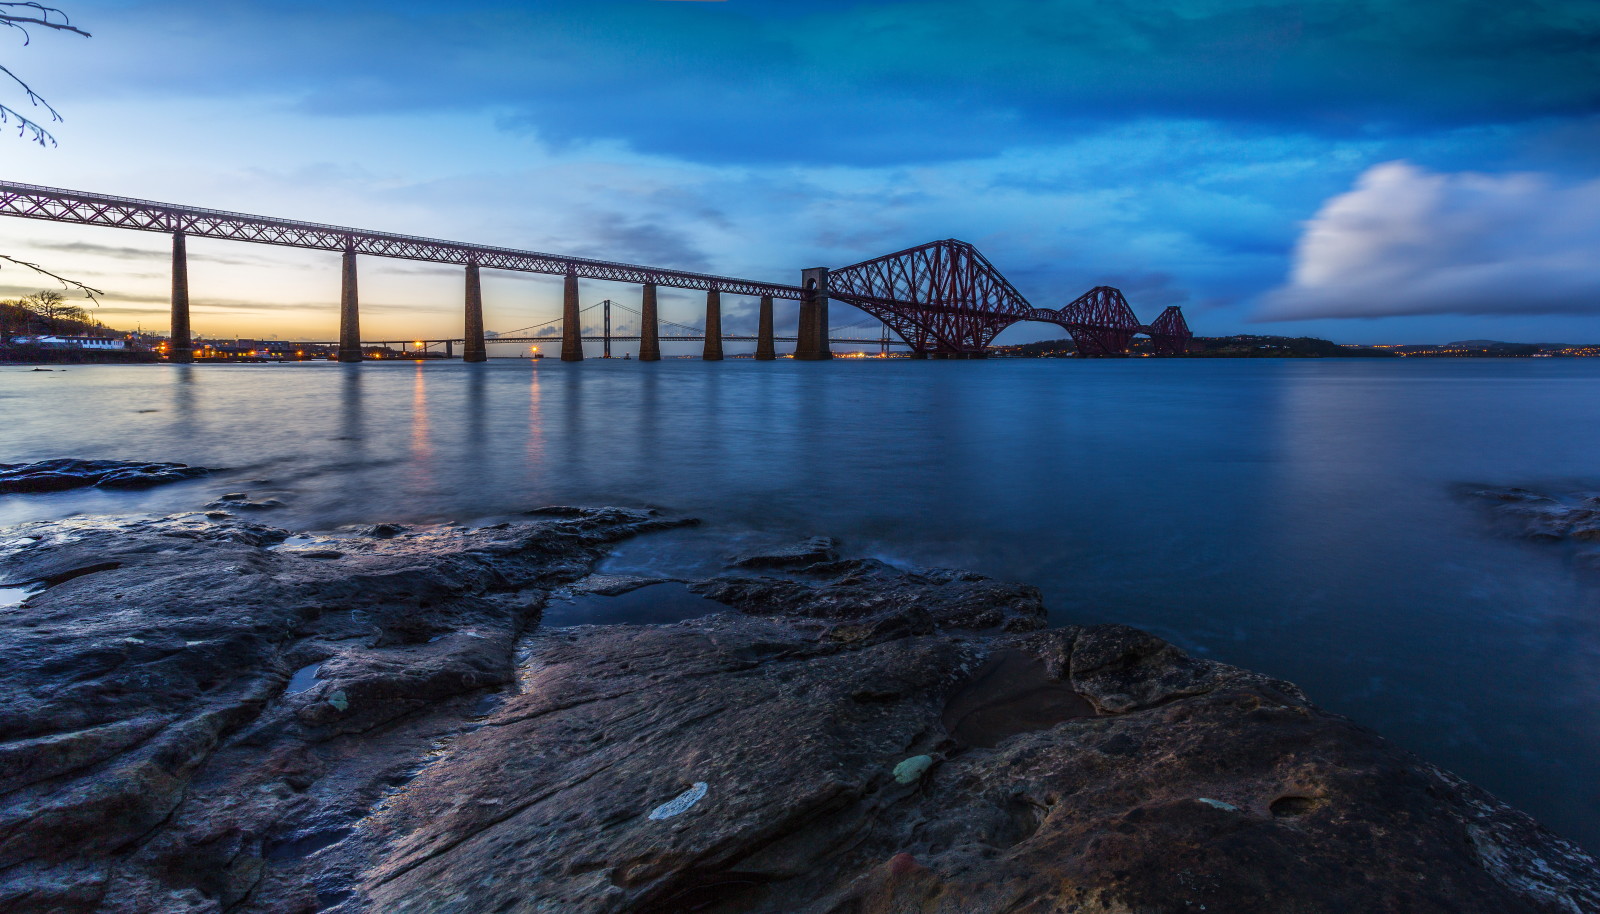 malam, matahari terbenam, Teluk, batu, lampu, Jembatan, pantai, Skotlandia